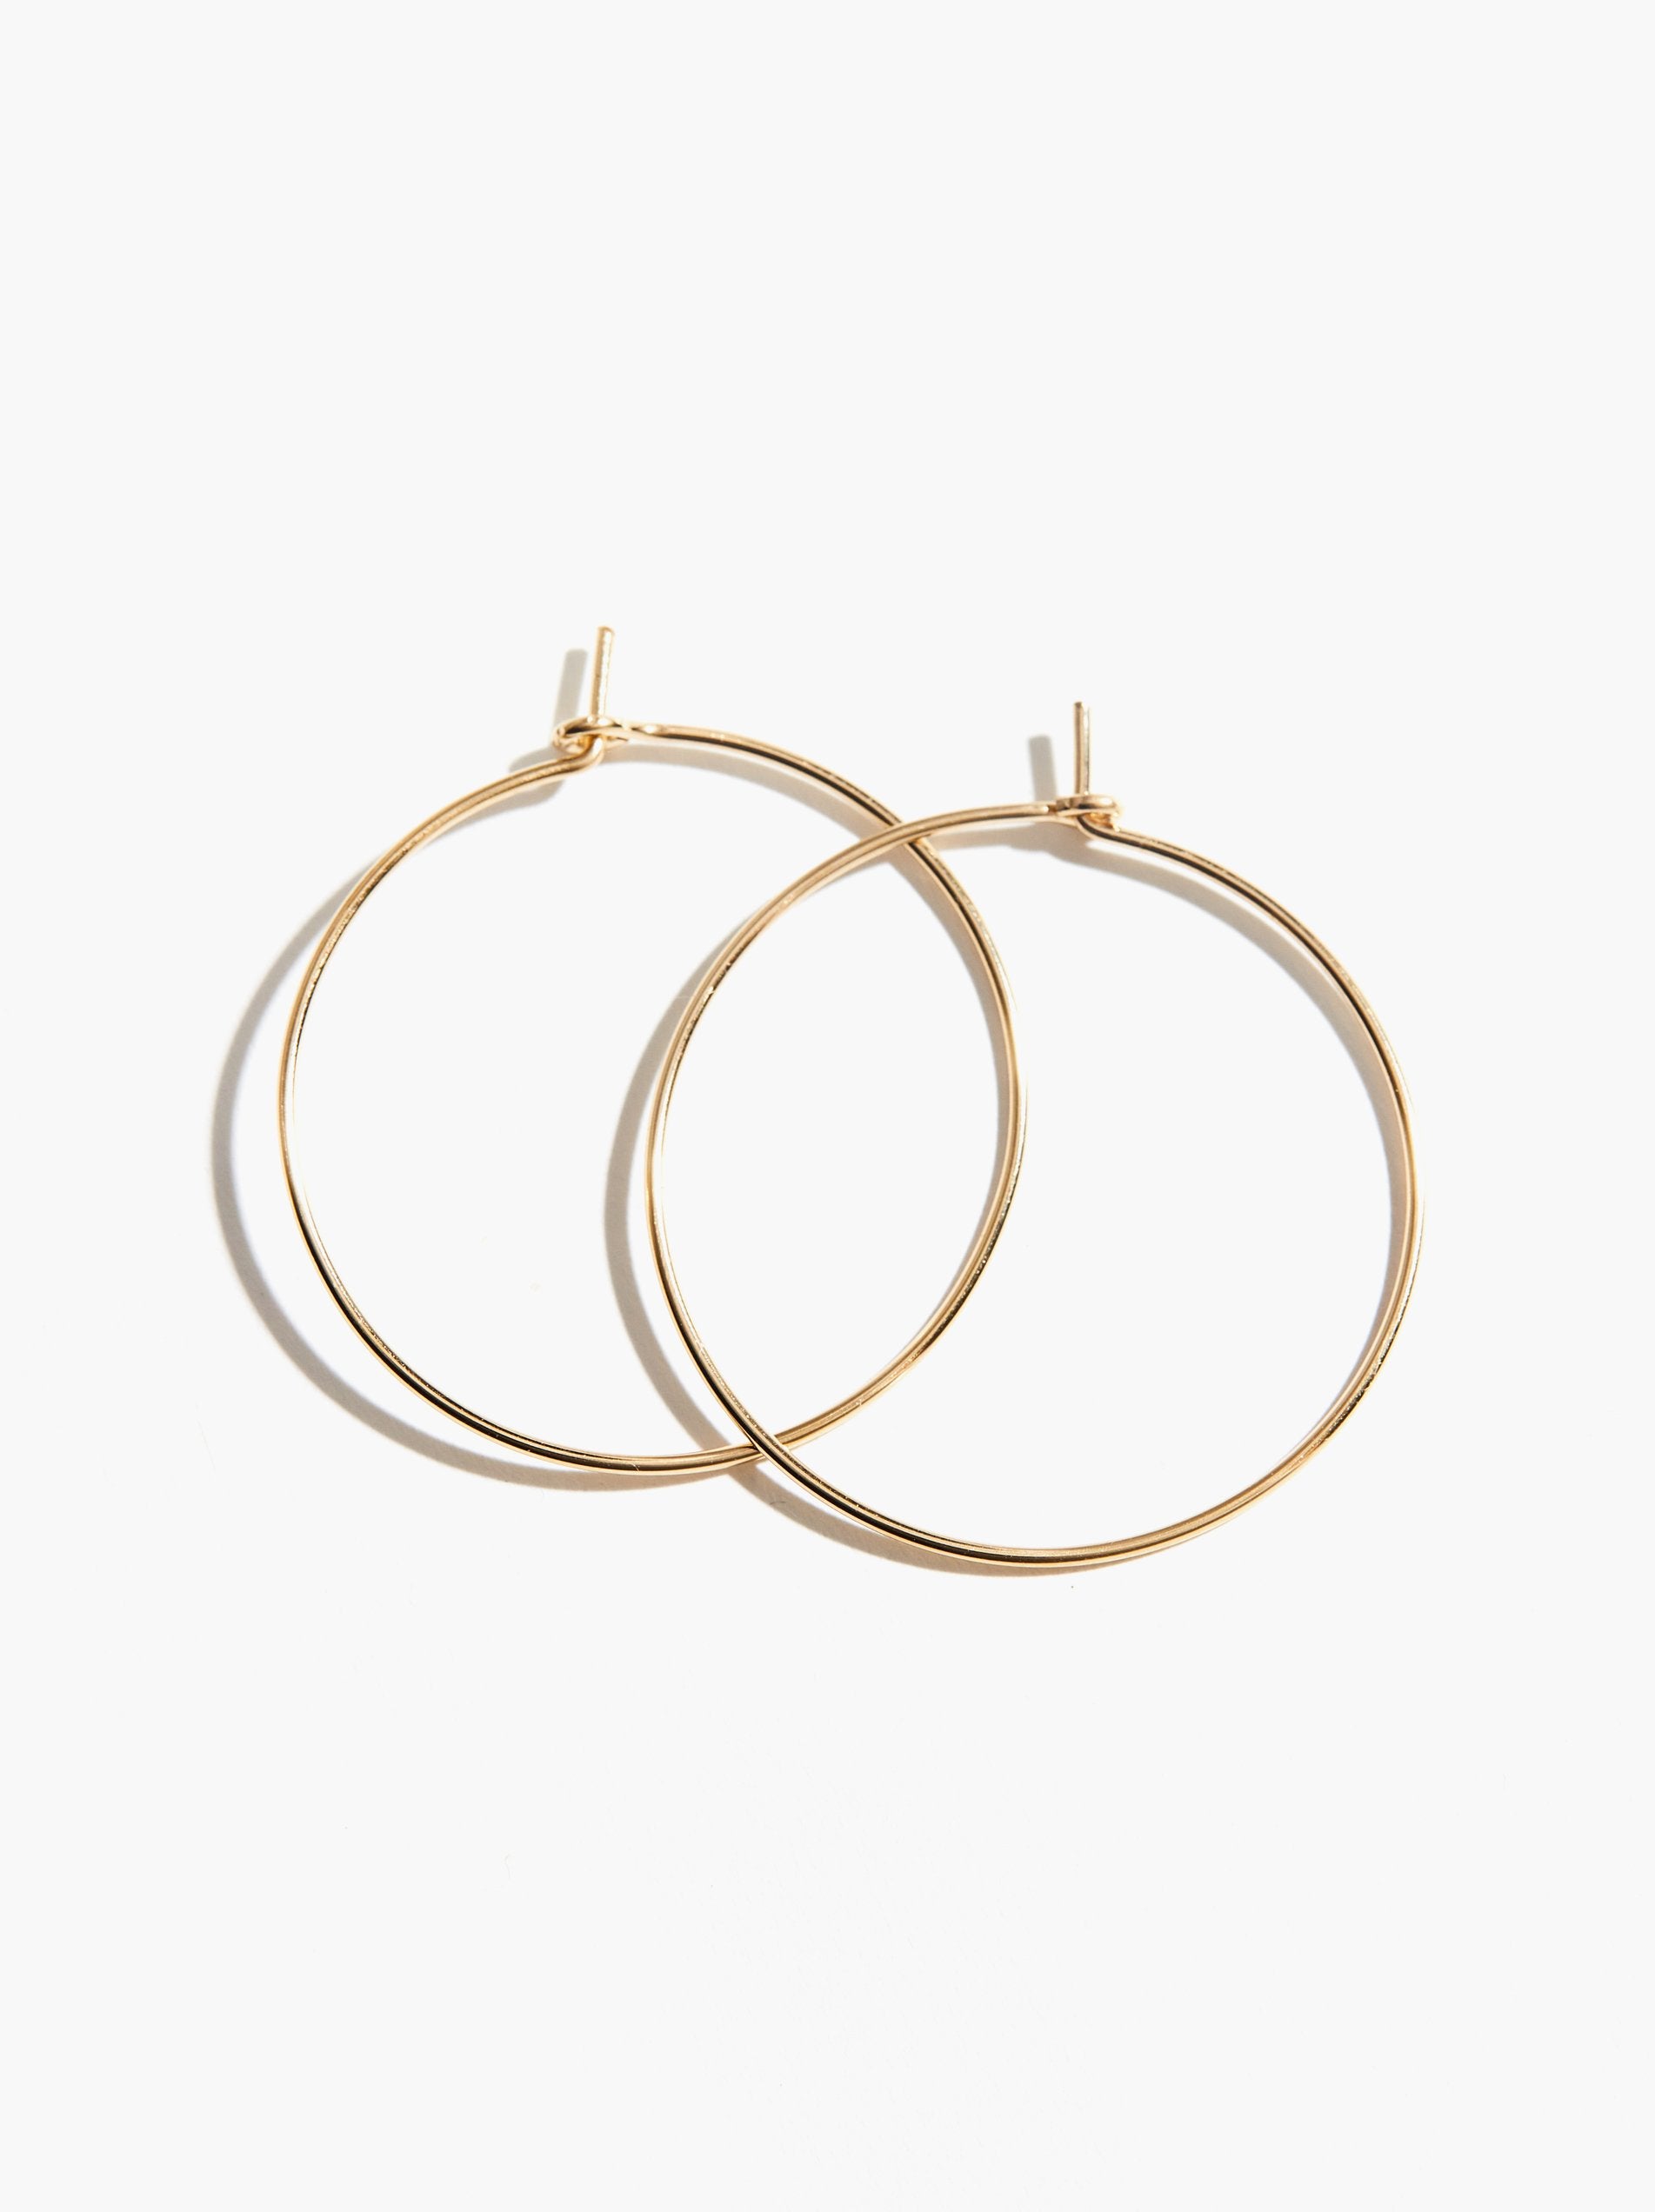 Large Gold Circle Earrings - simple thin hoop on latching kidney